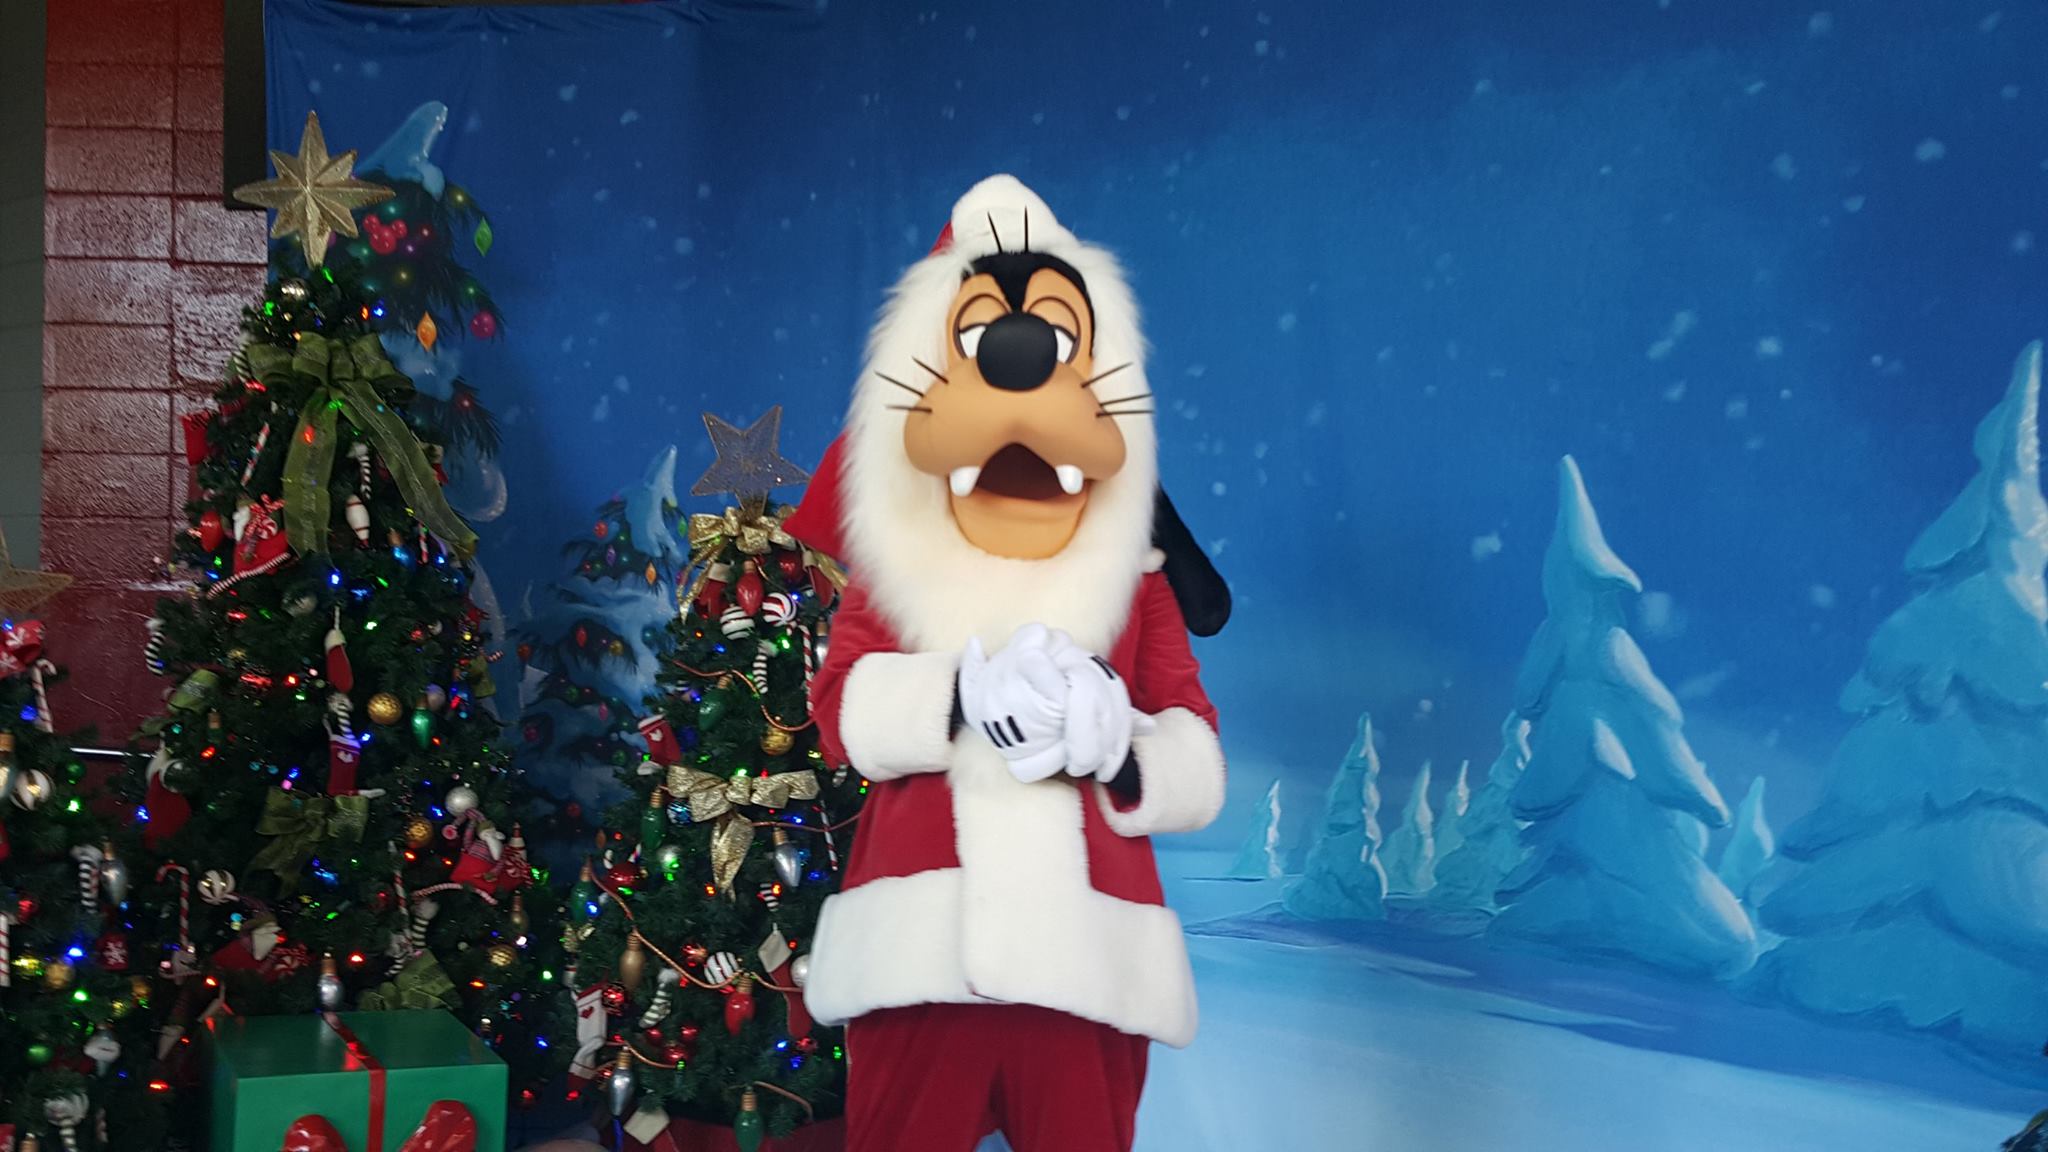 Meet Santa Goofy at Disney’s Hollywood Studios